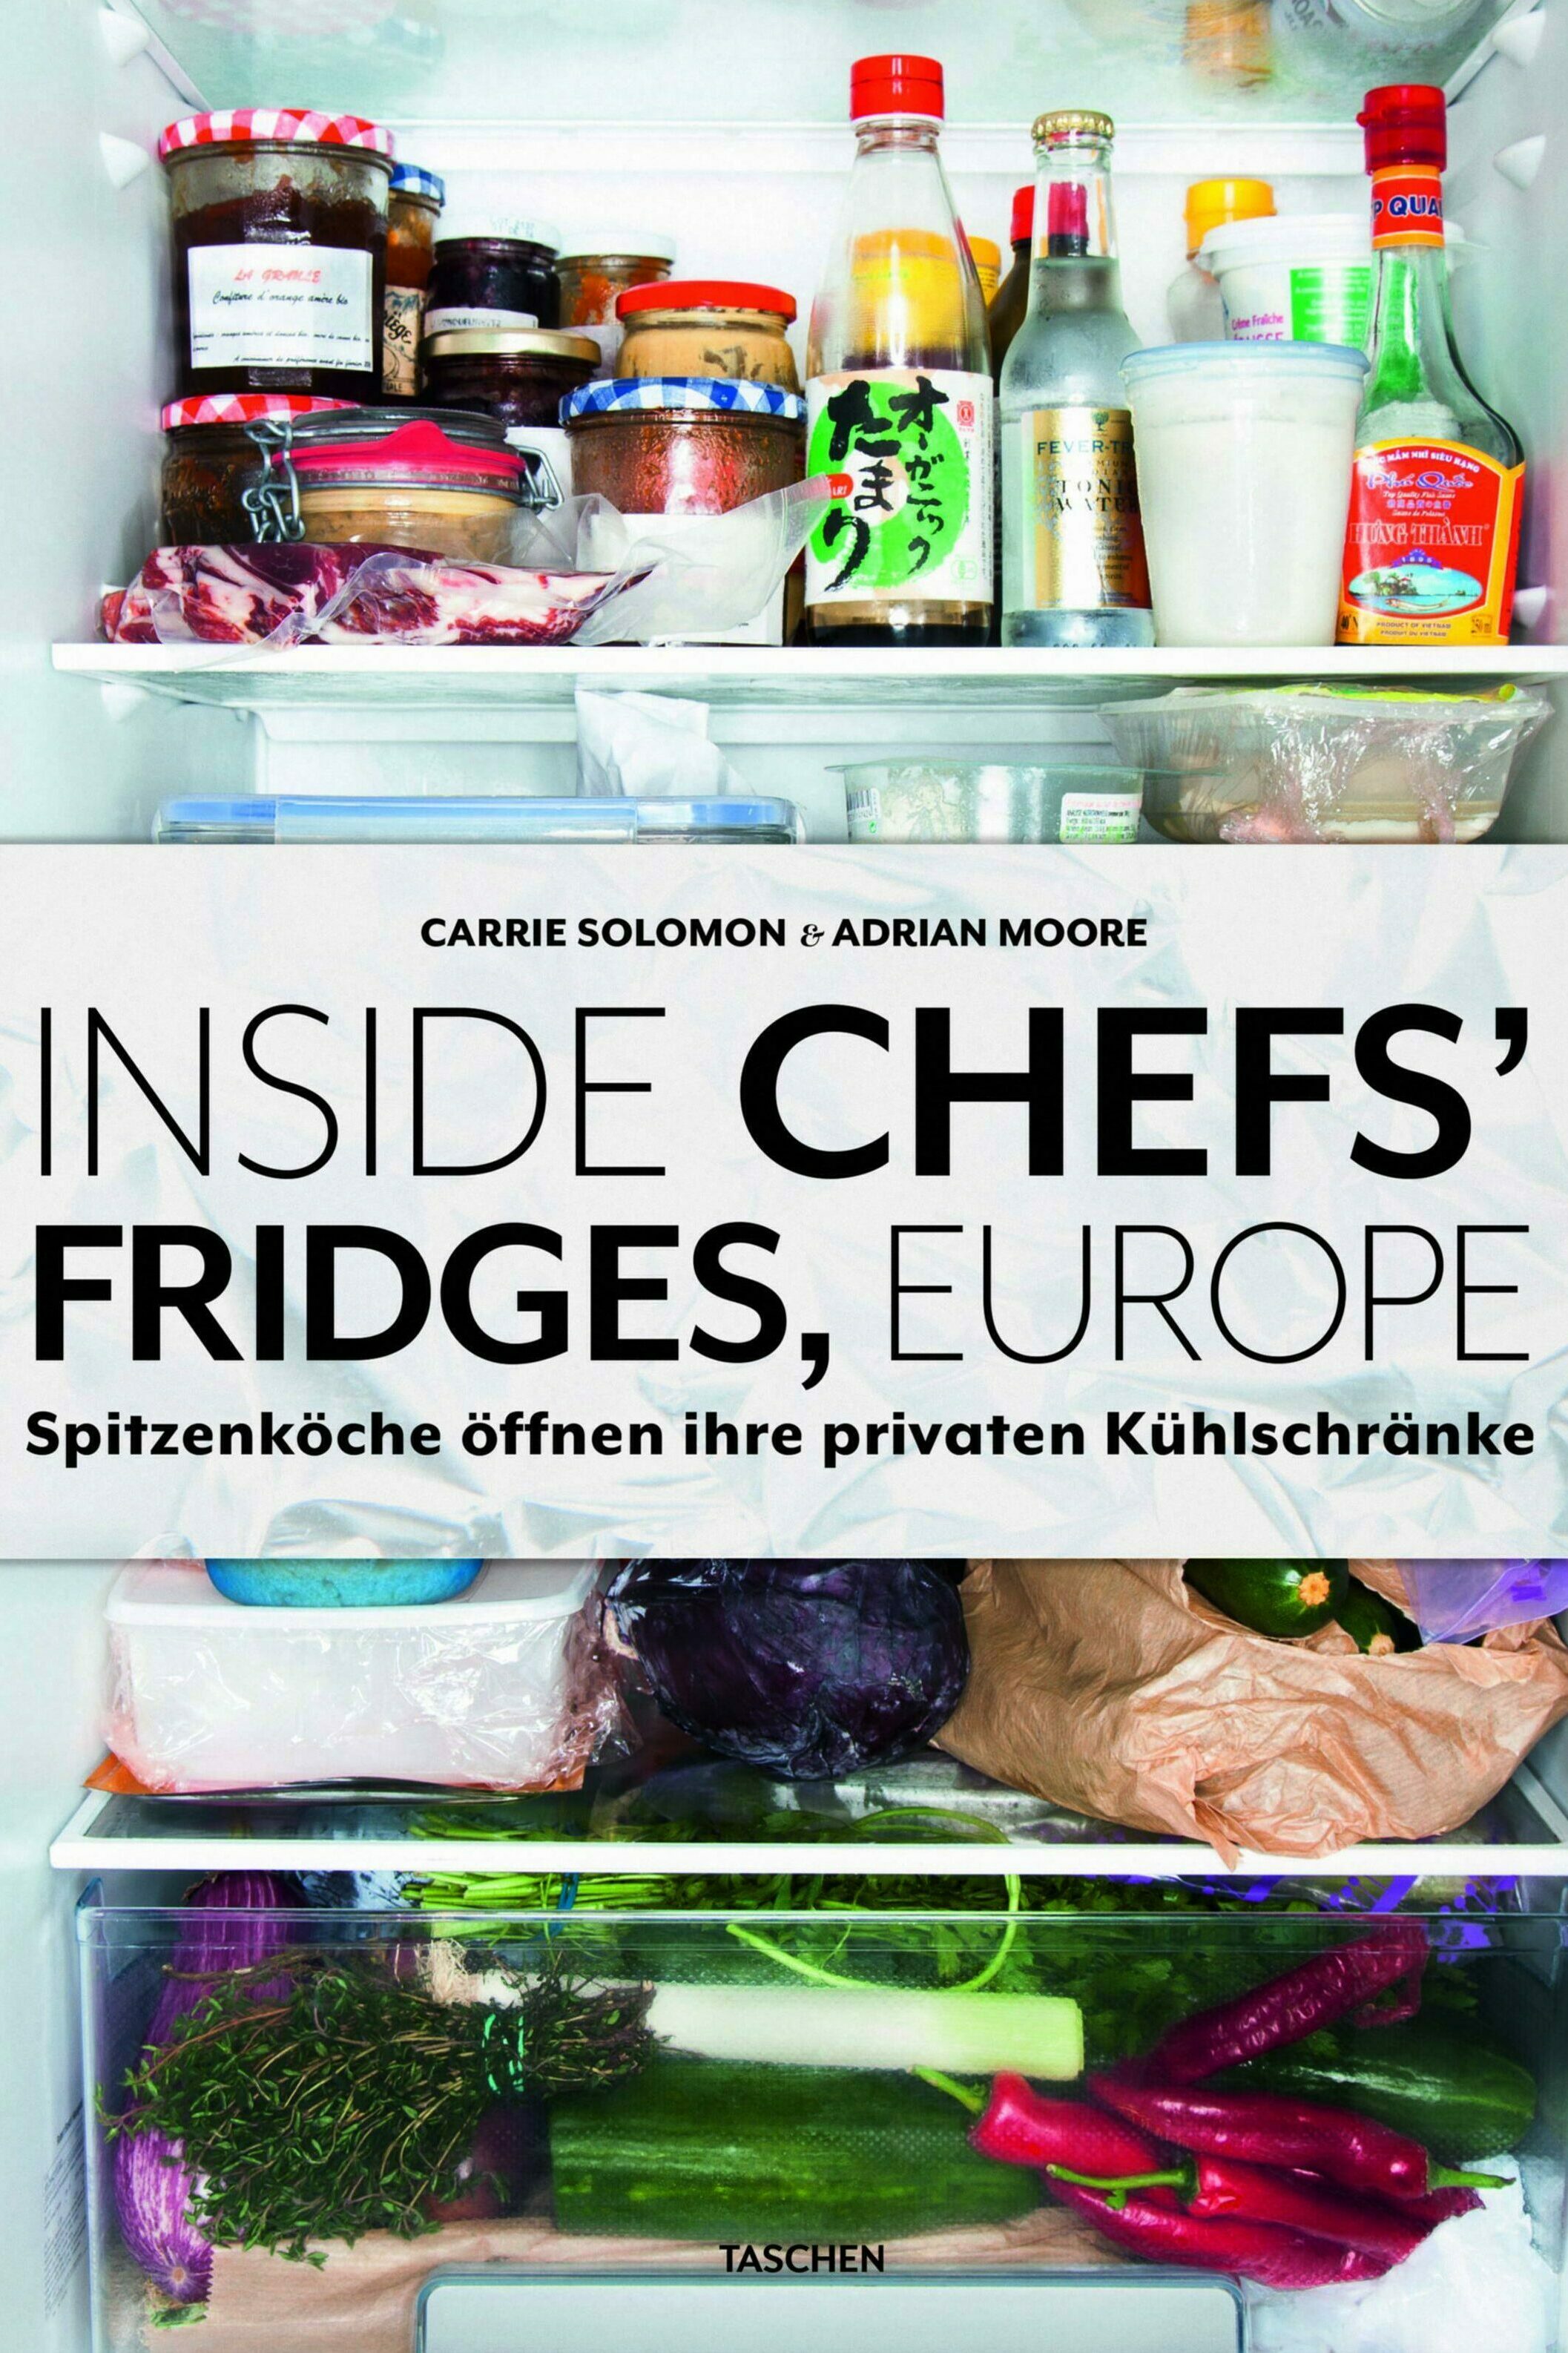 inside chefs’ fridges, europe carrie solomon adrian moore kochbuch kochkultur esskultur